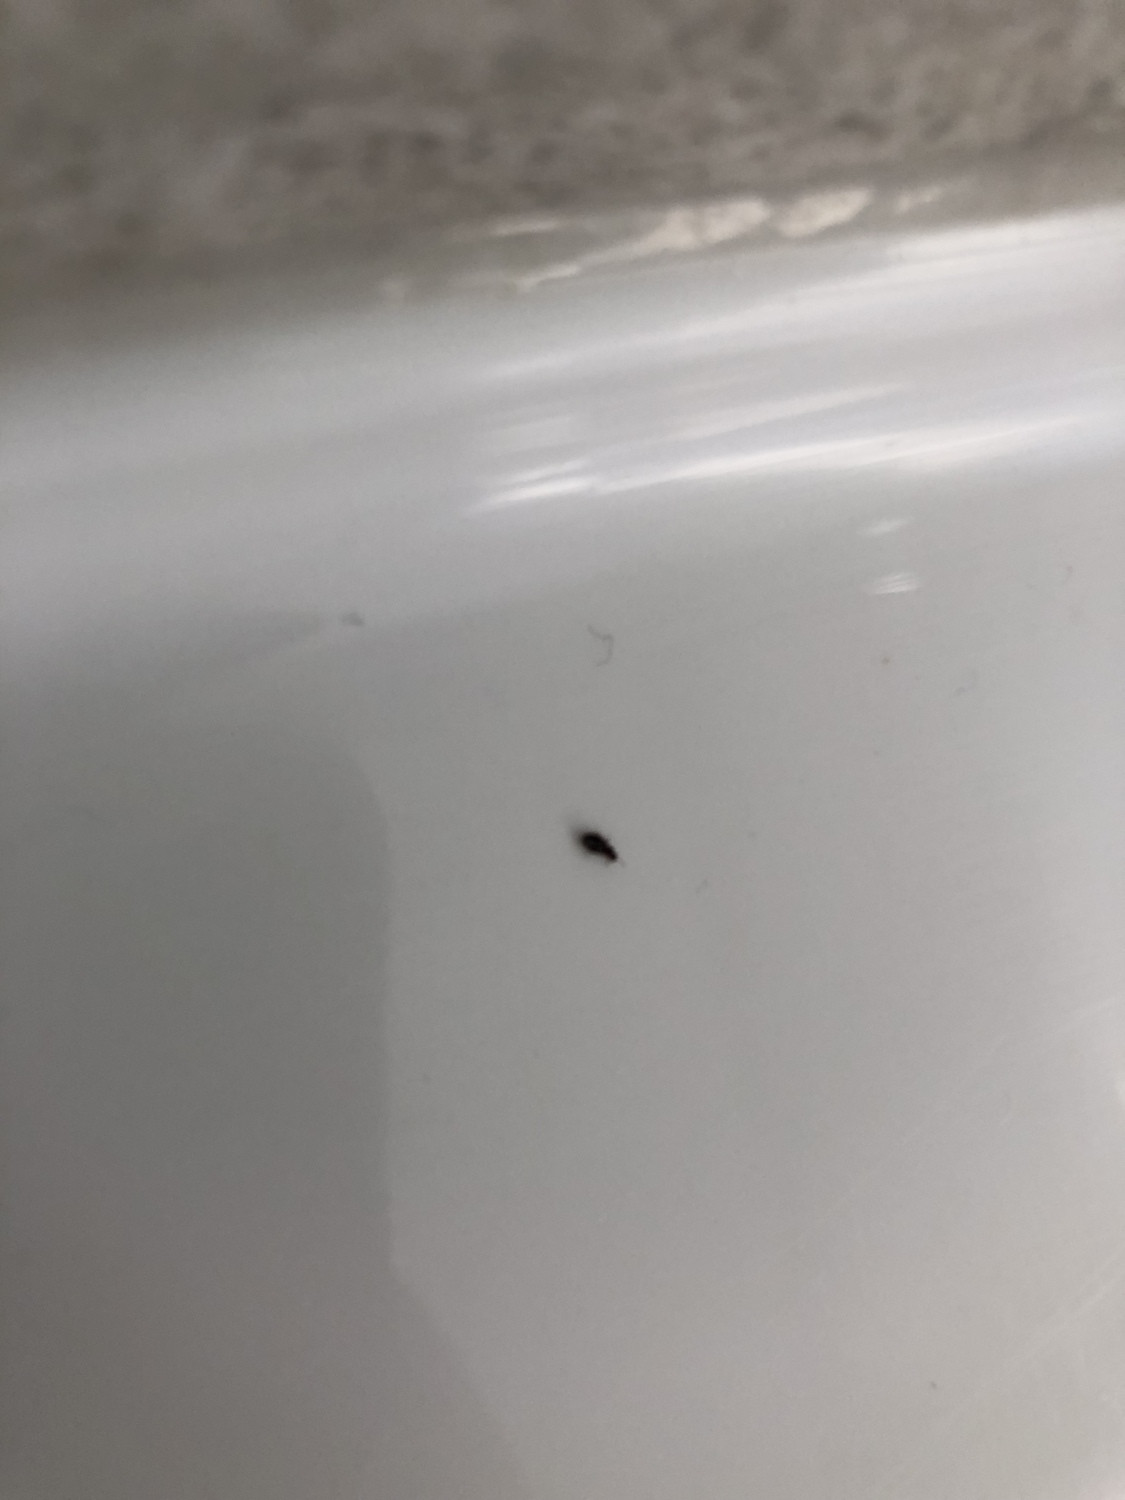 Small Bugs In Bathroom Fresh Tiny Bug In Bathroom ask An Expert